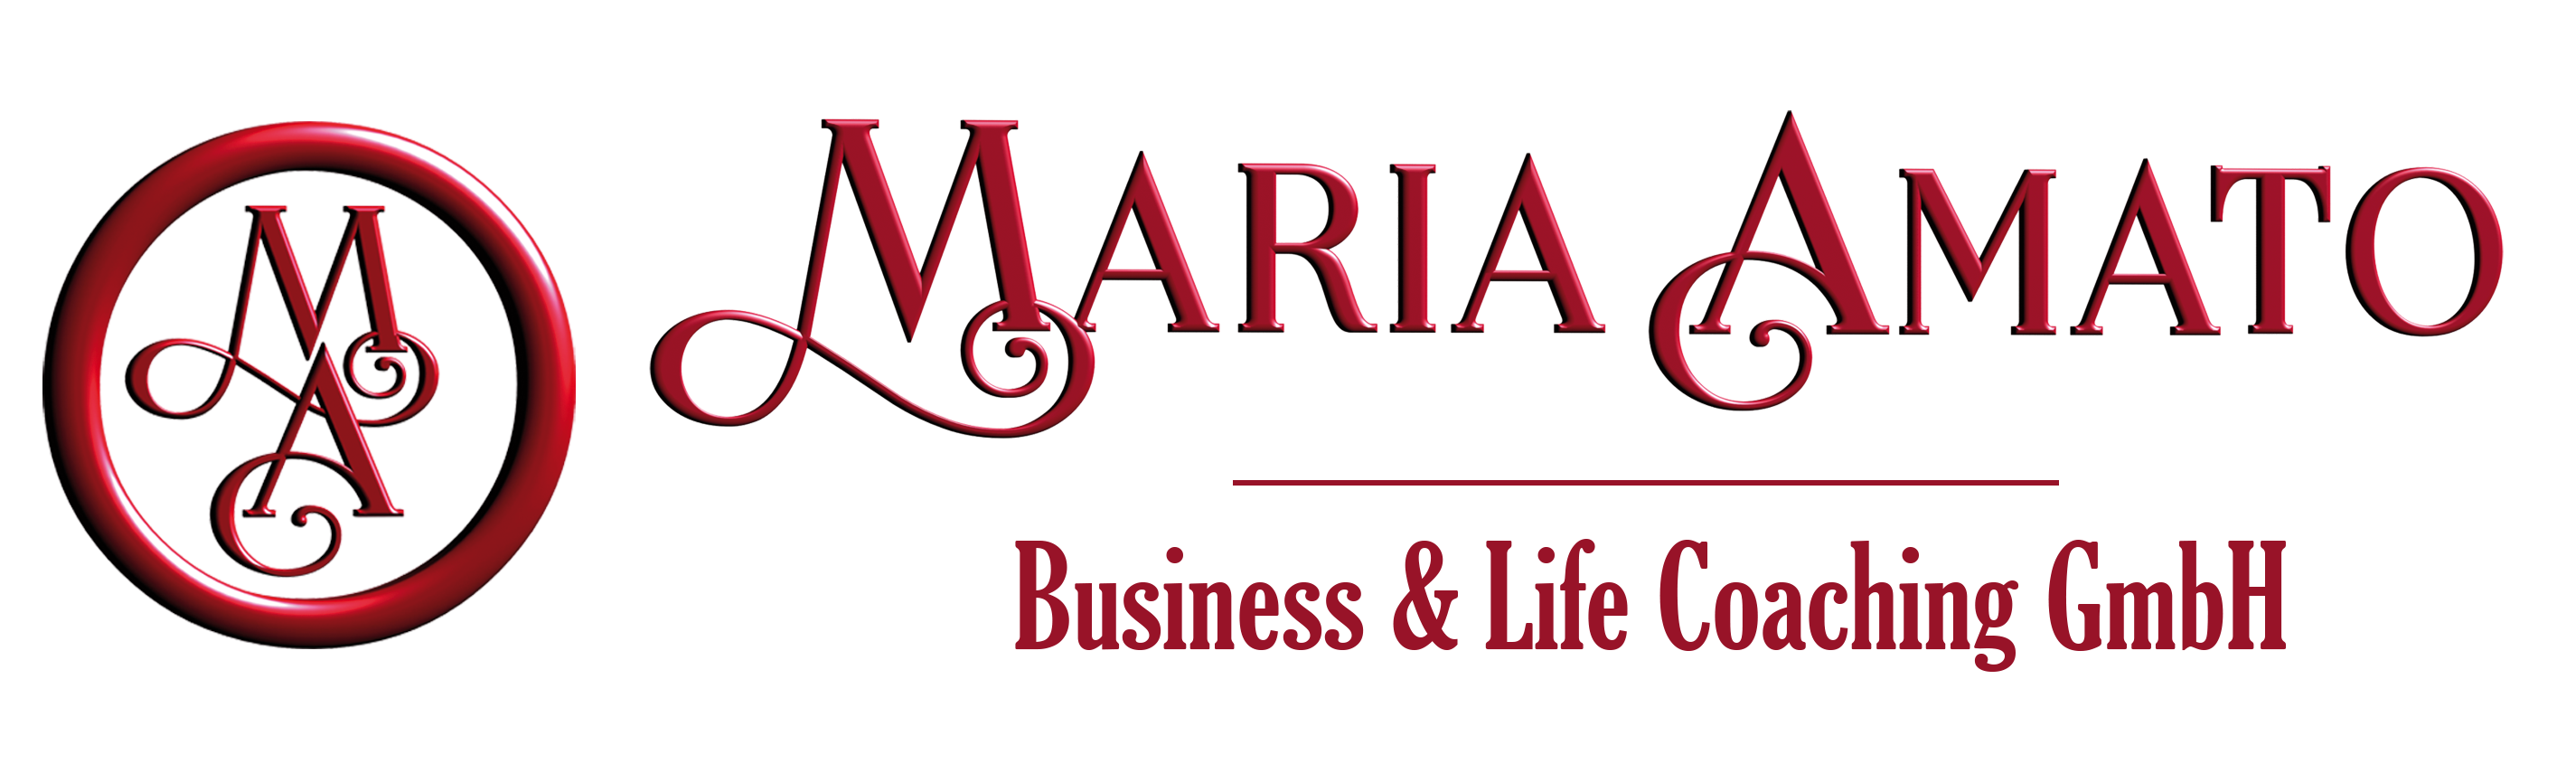 Maria Amato Business & Life Coaching GmbH